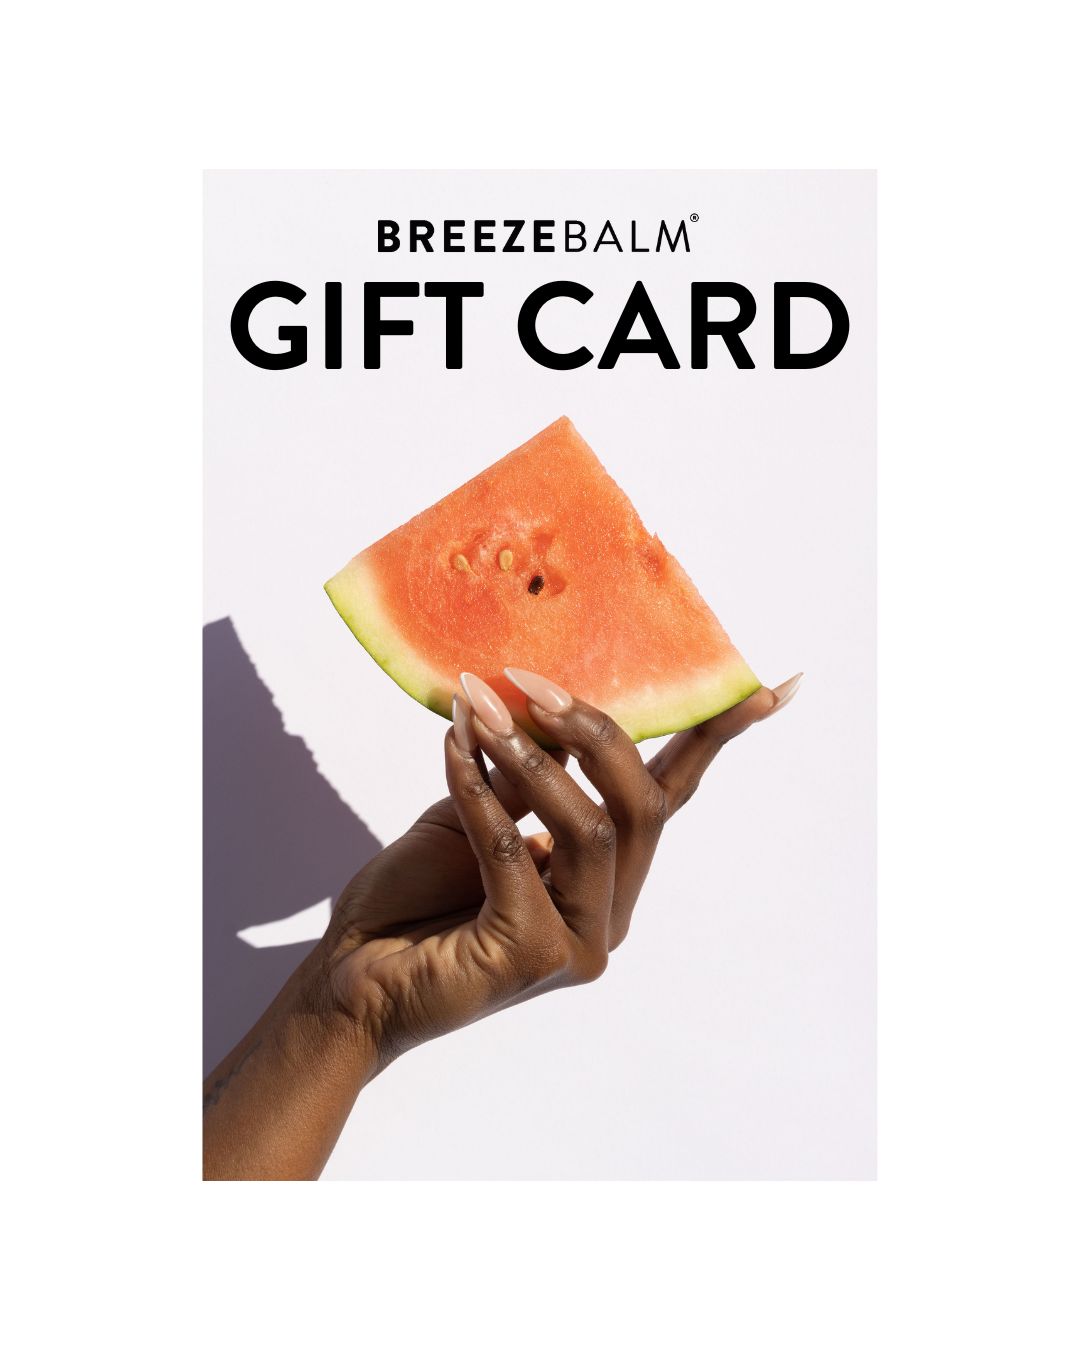 Breeze Balm Gift Card